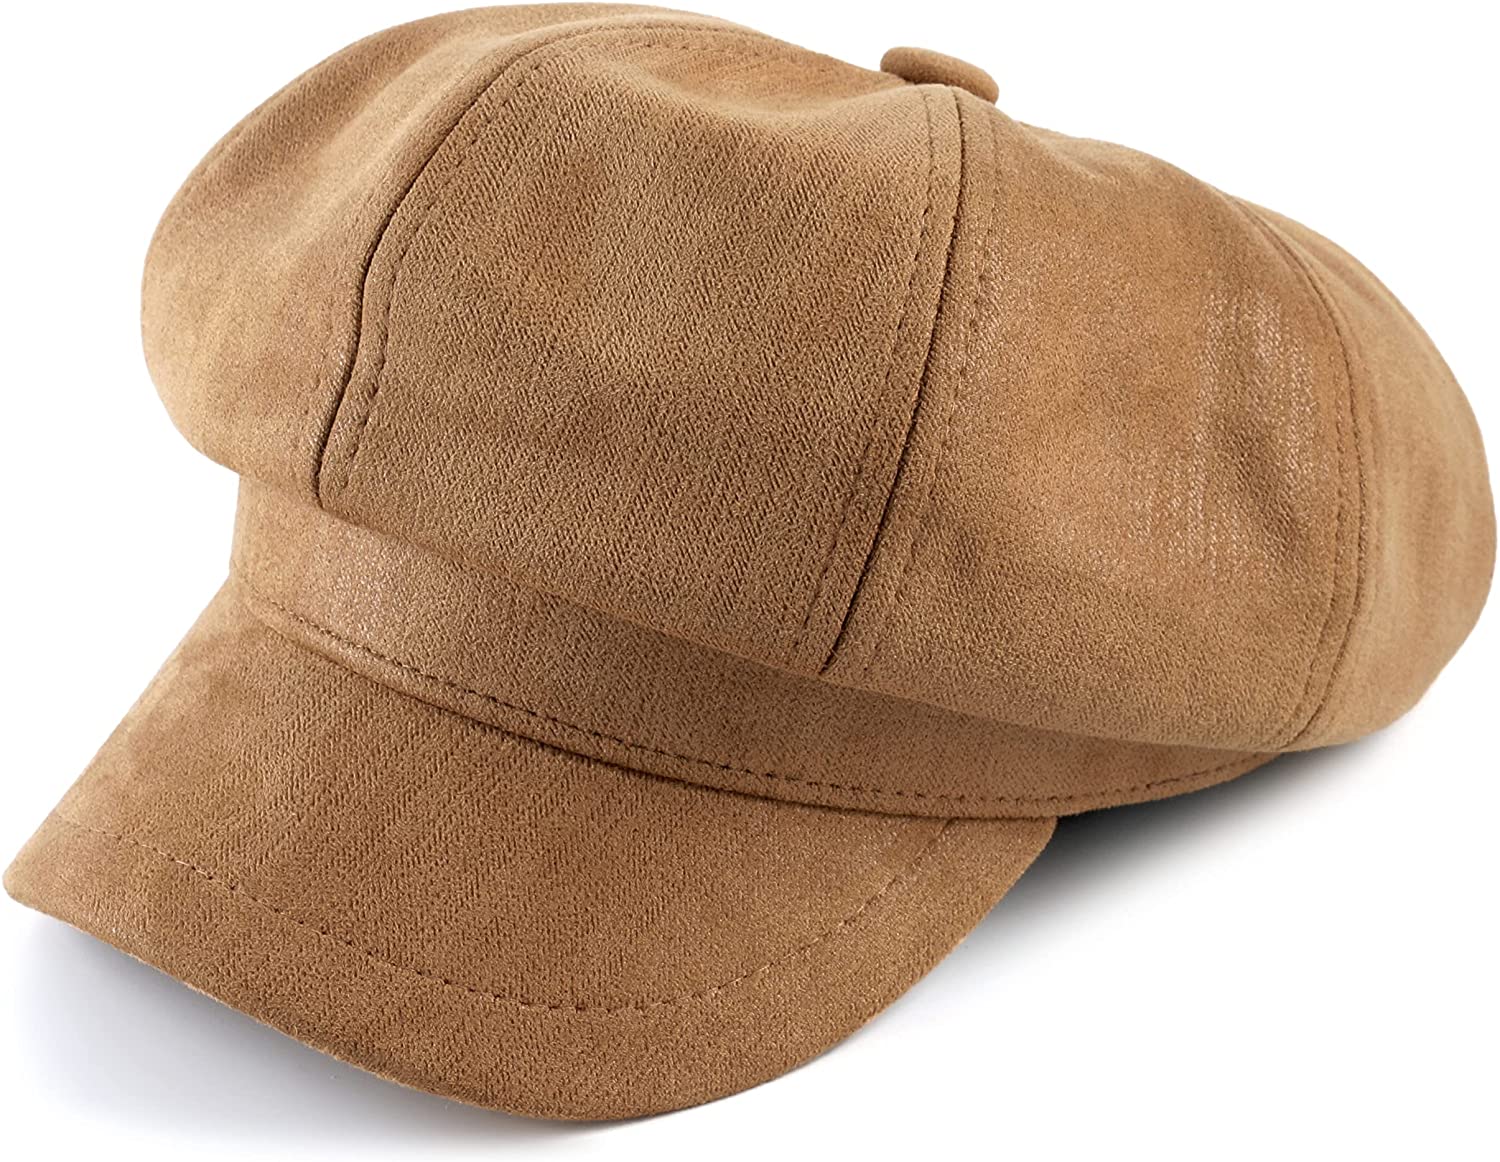 Women Hats Suede Classic Newsboy Cabbie Beret Hat Soft Warm Octagonal Cap for Ladies 